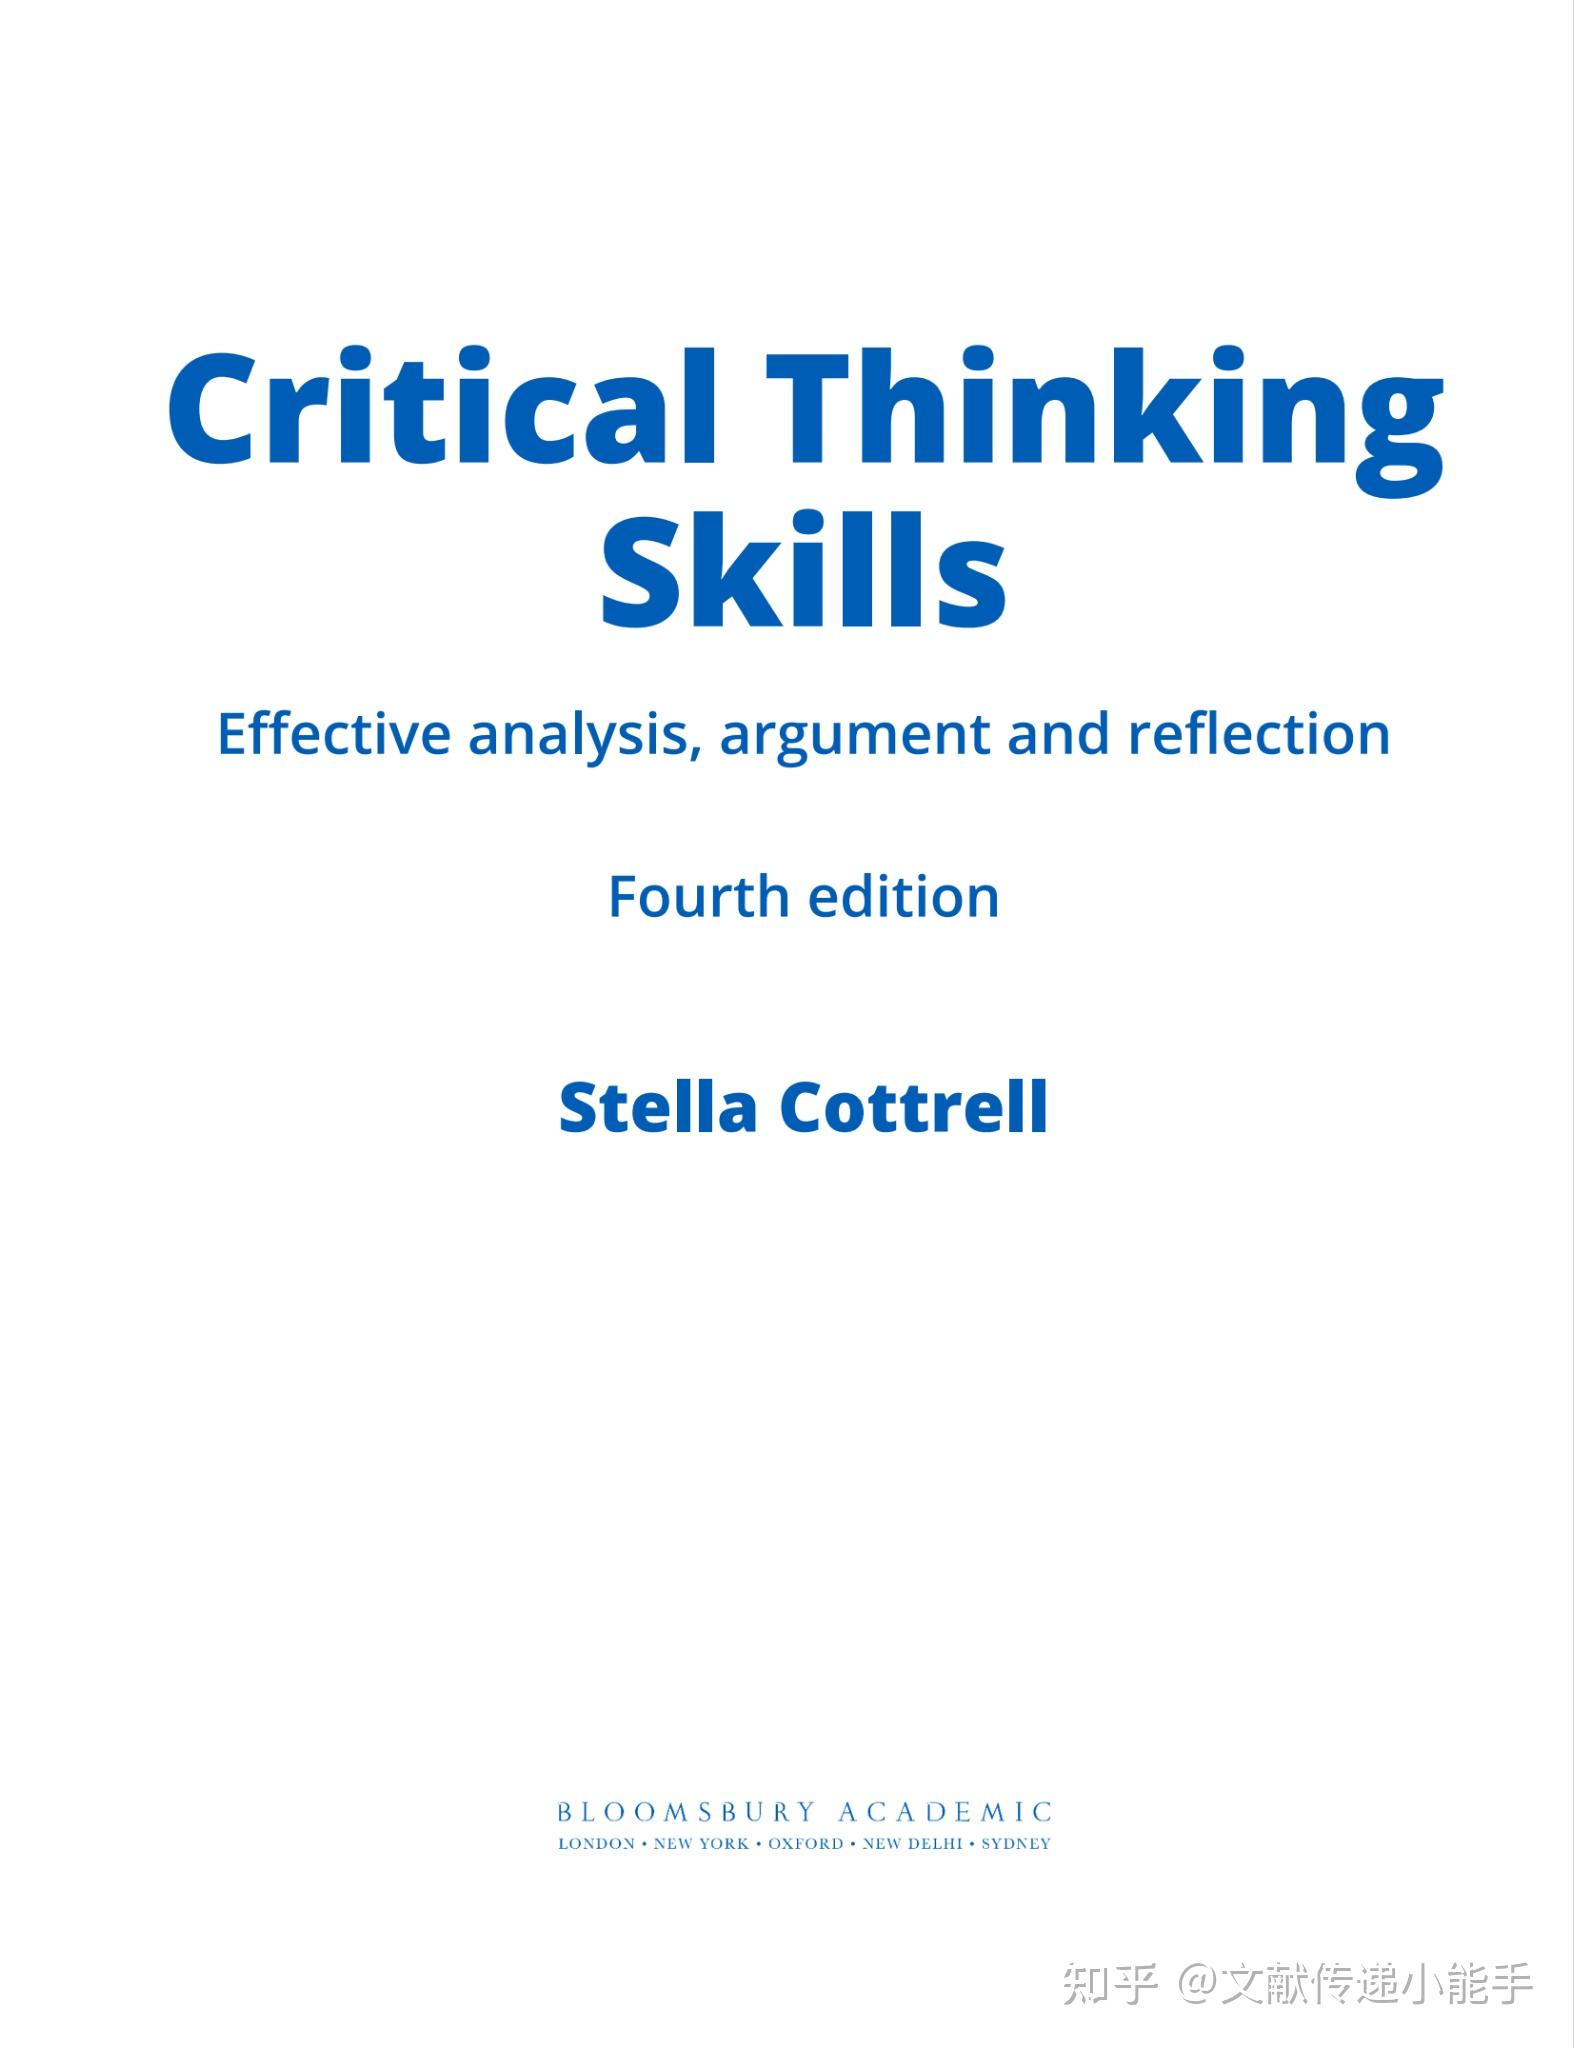 critical thinking skills stella cottrell 3rd edition pdf